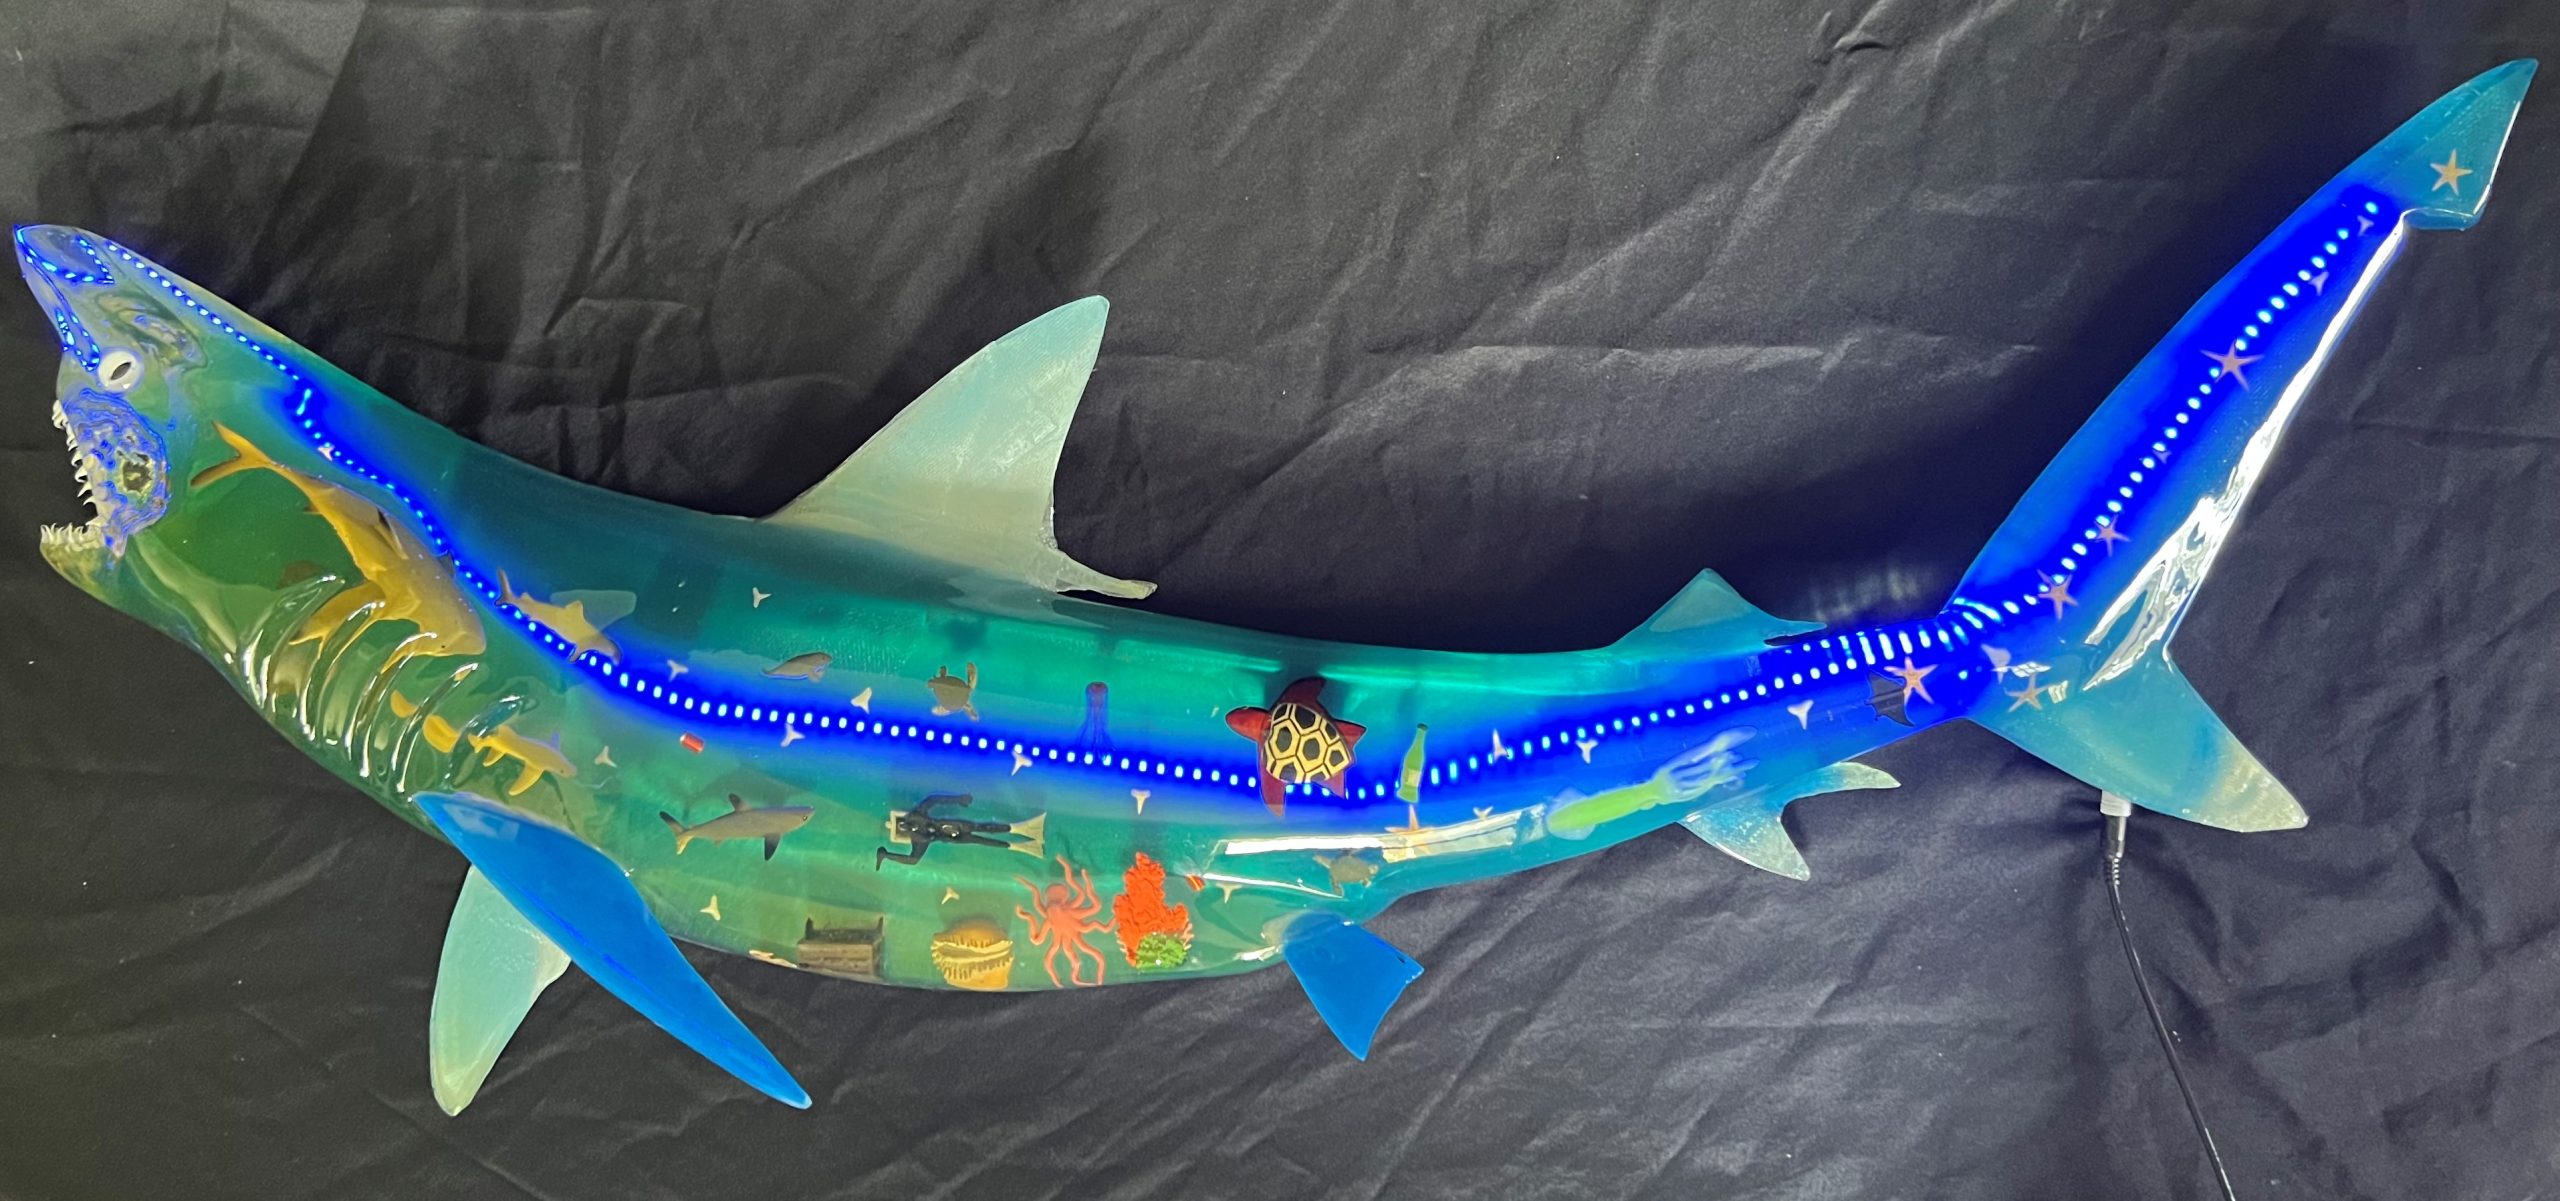 LED Light Up Multimedia Shark Wall Sculpture